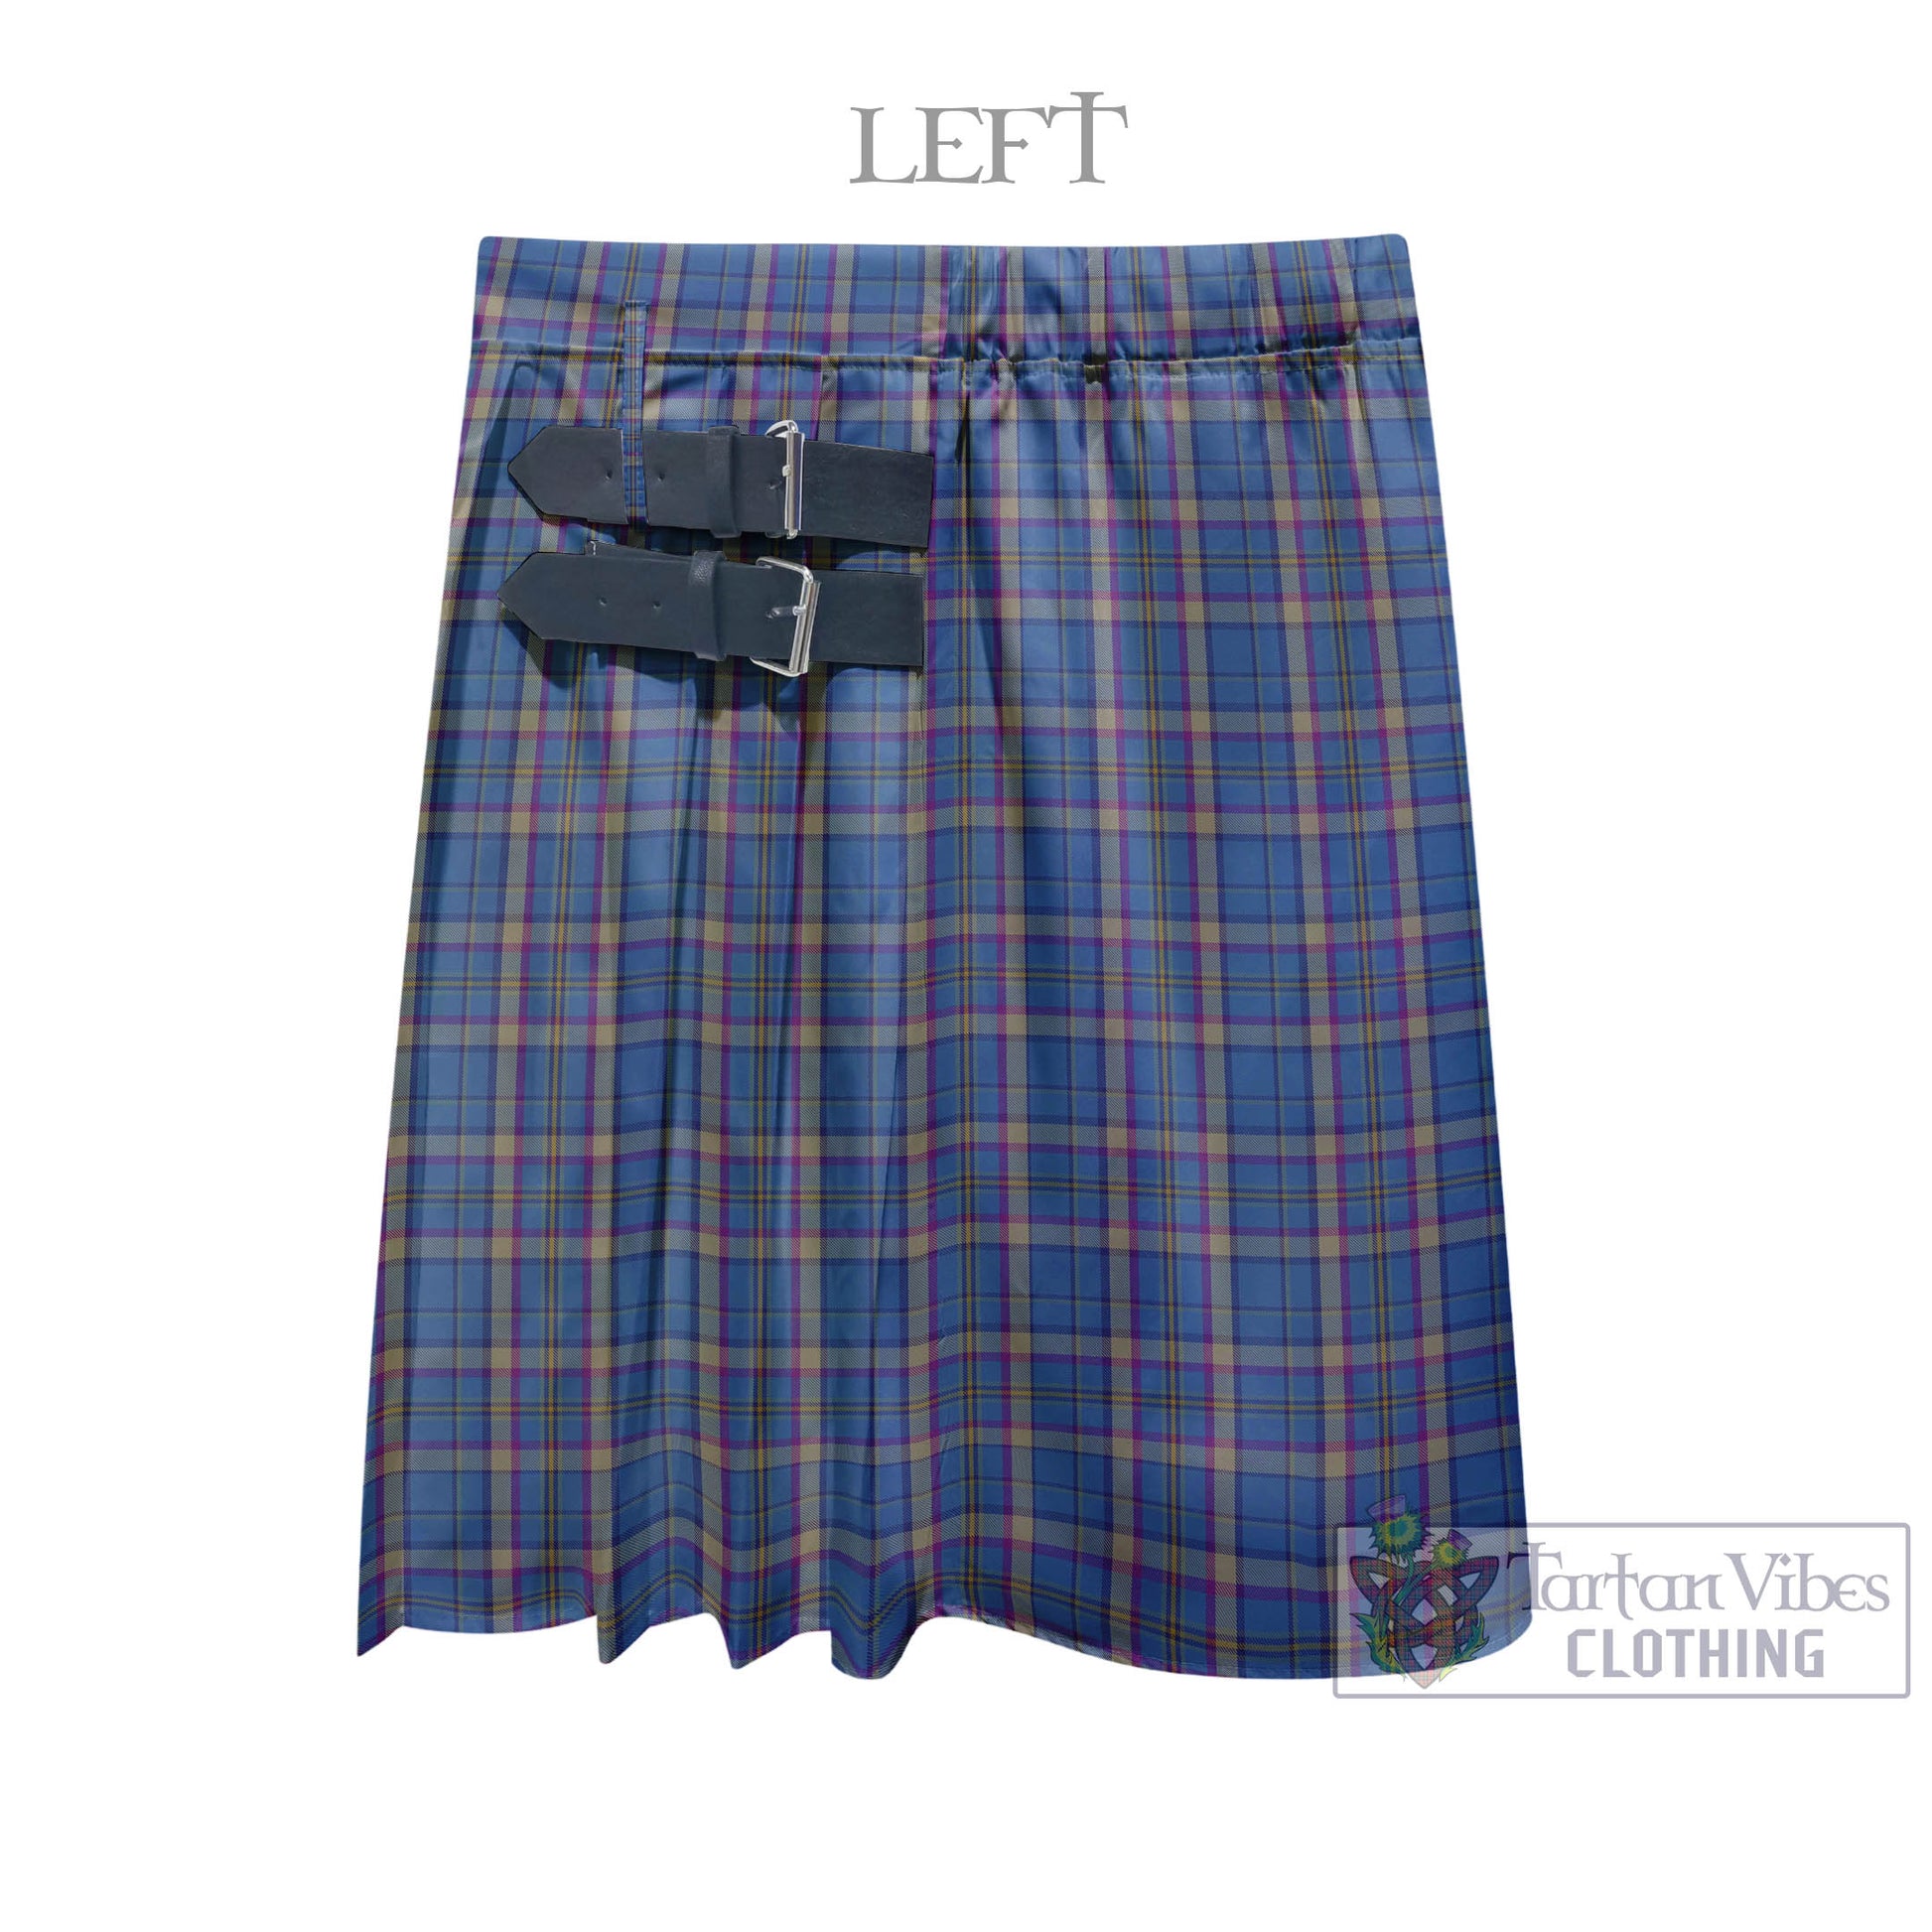 Tartan Vibes Clothing Cian Tartan Men's Pleated Skirt - Fashion Casual Retro Scottish Style